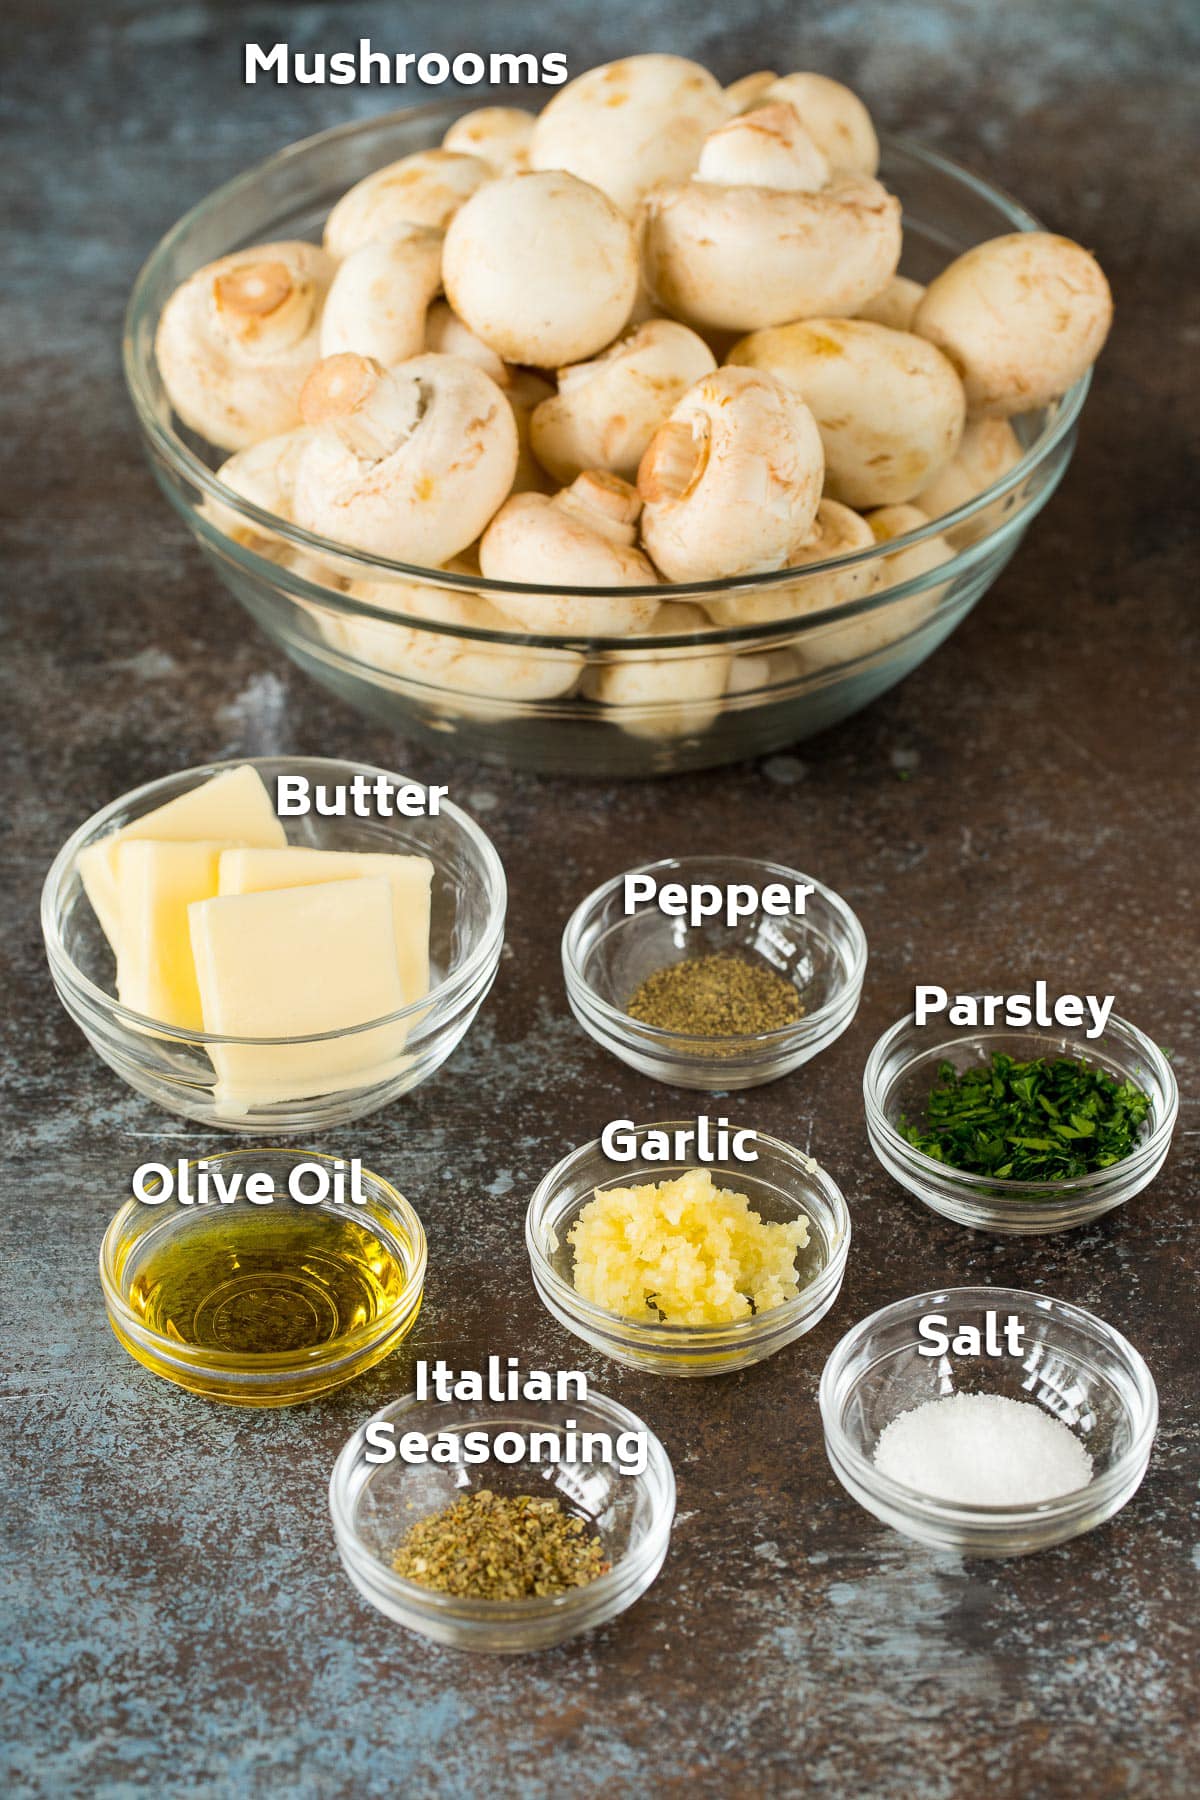 Bowls of ingredients including mushrooms, butter, oil and seasonings.